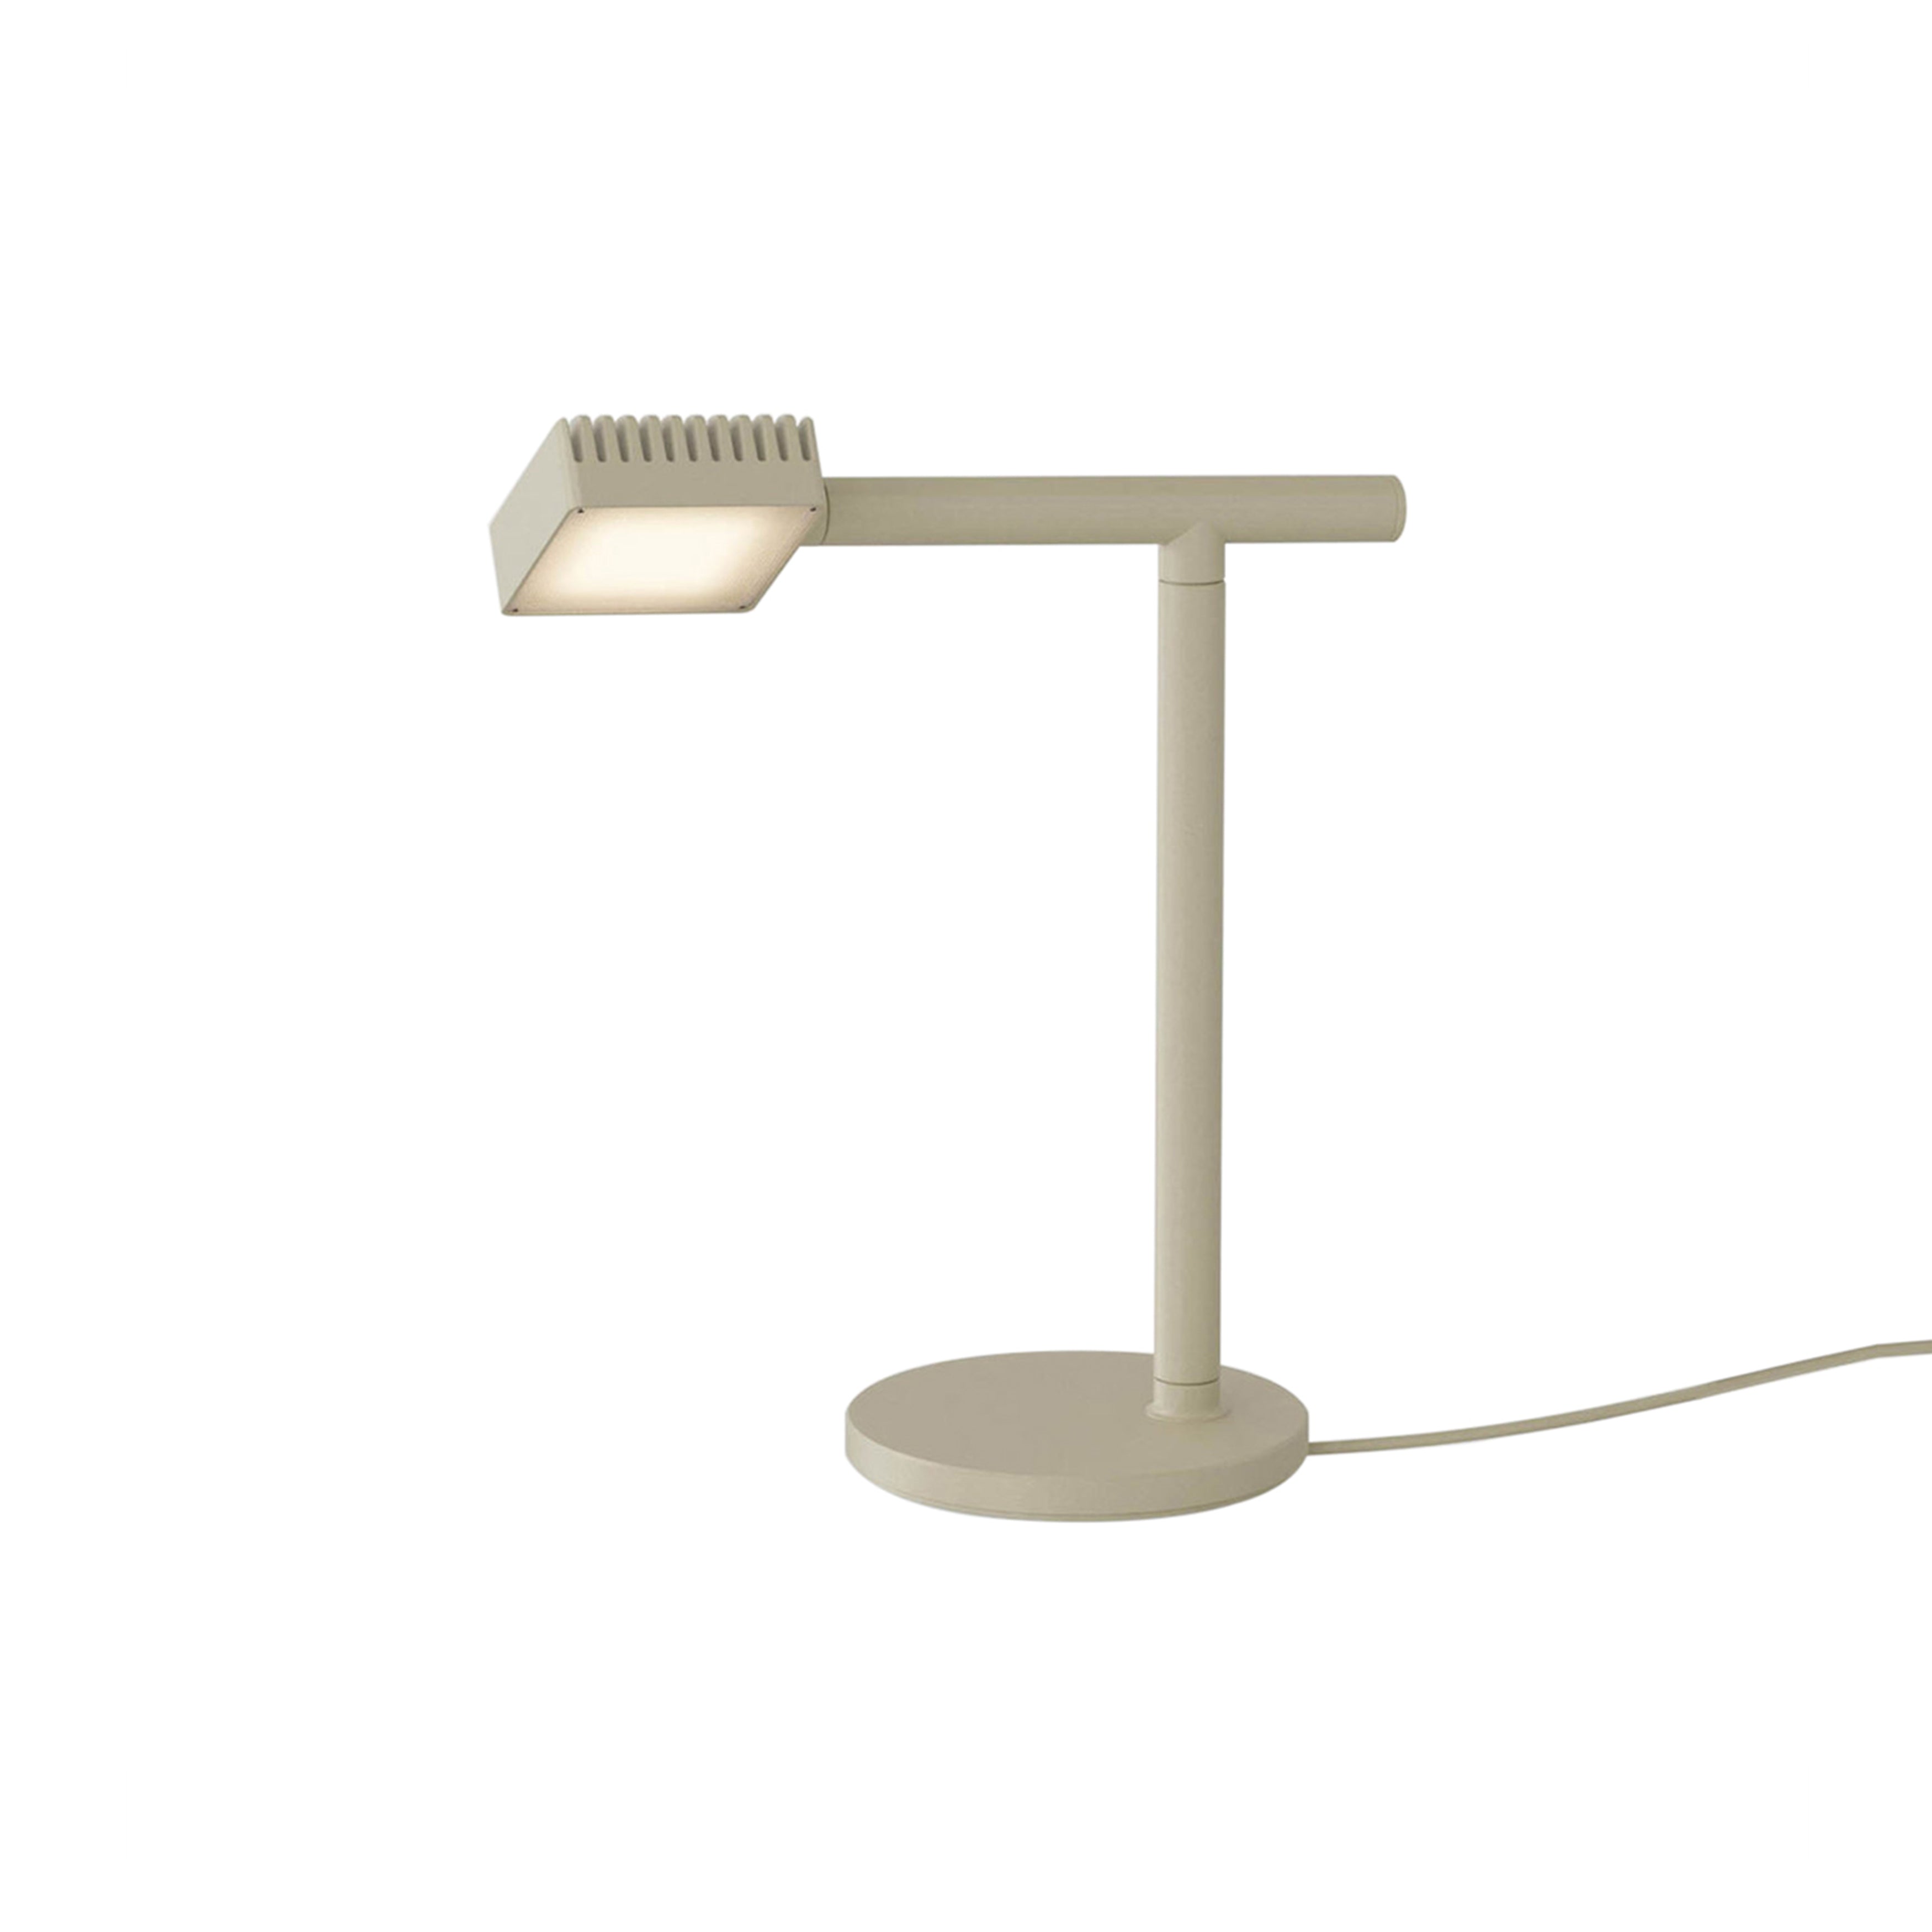 Dorval 02 Table Lamp: Beige + Beige